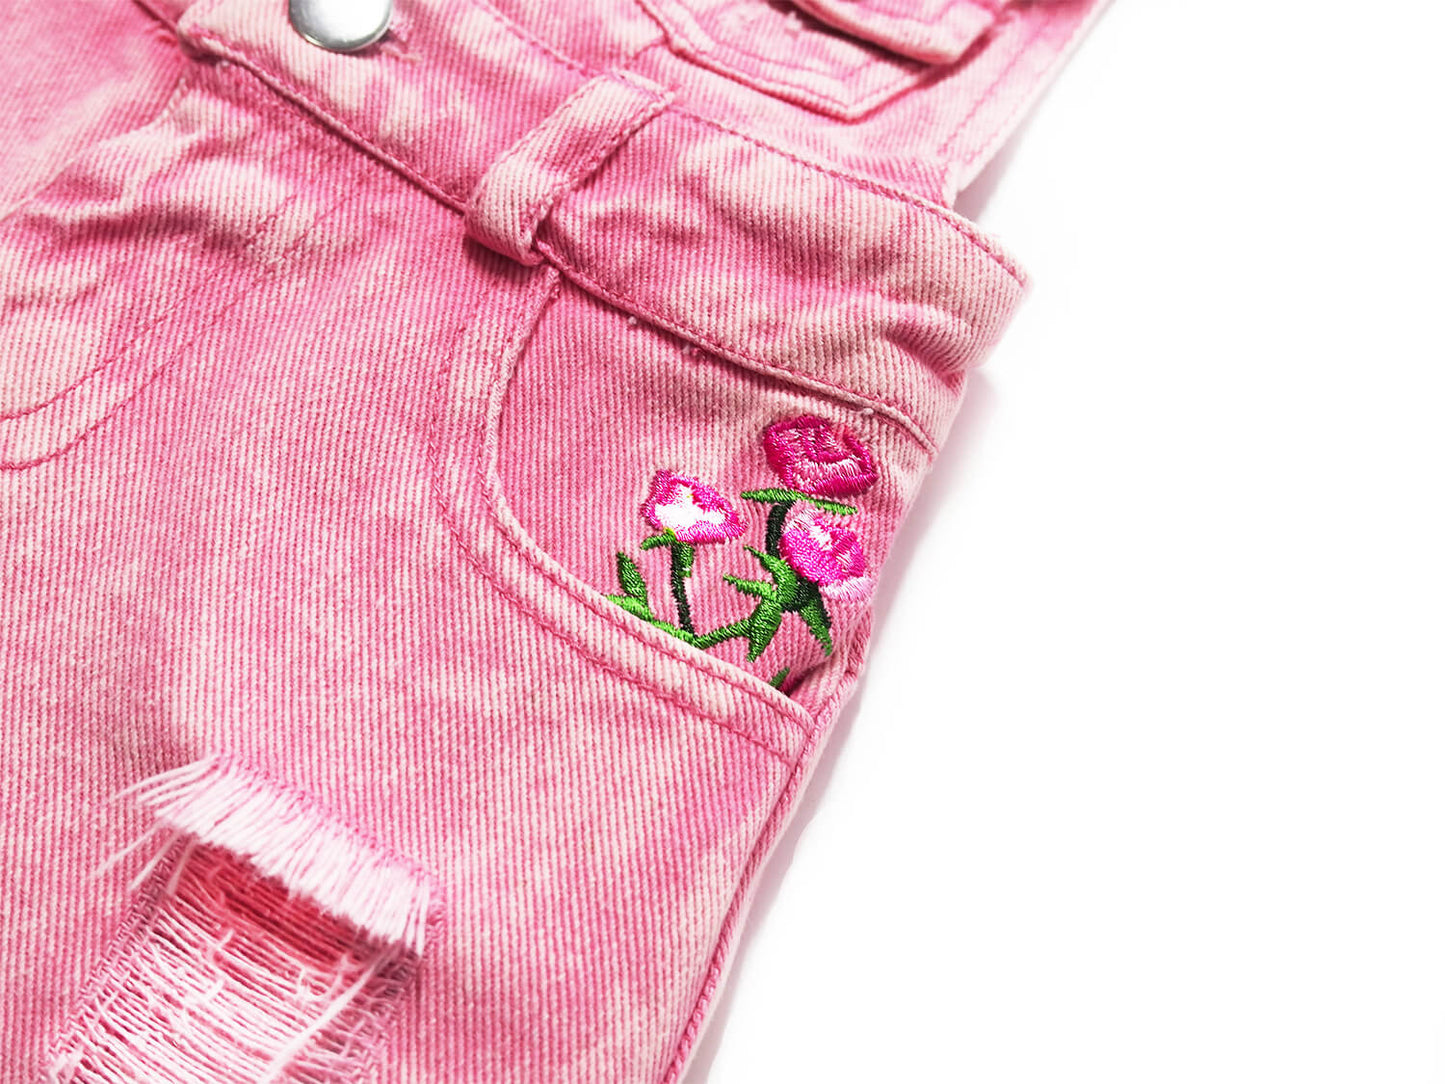 Stylish Pink Kids Denim Overalls Shortalls